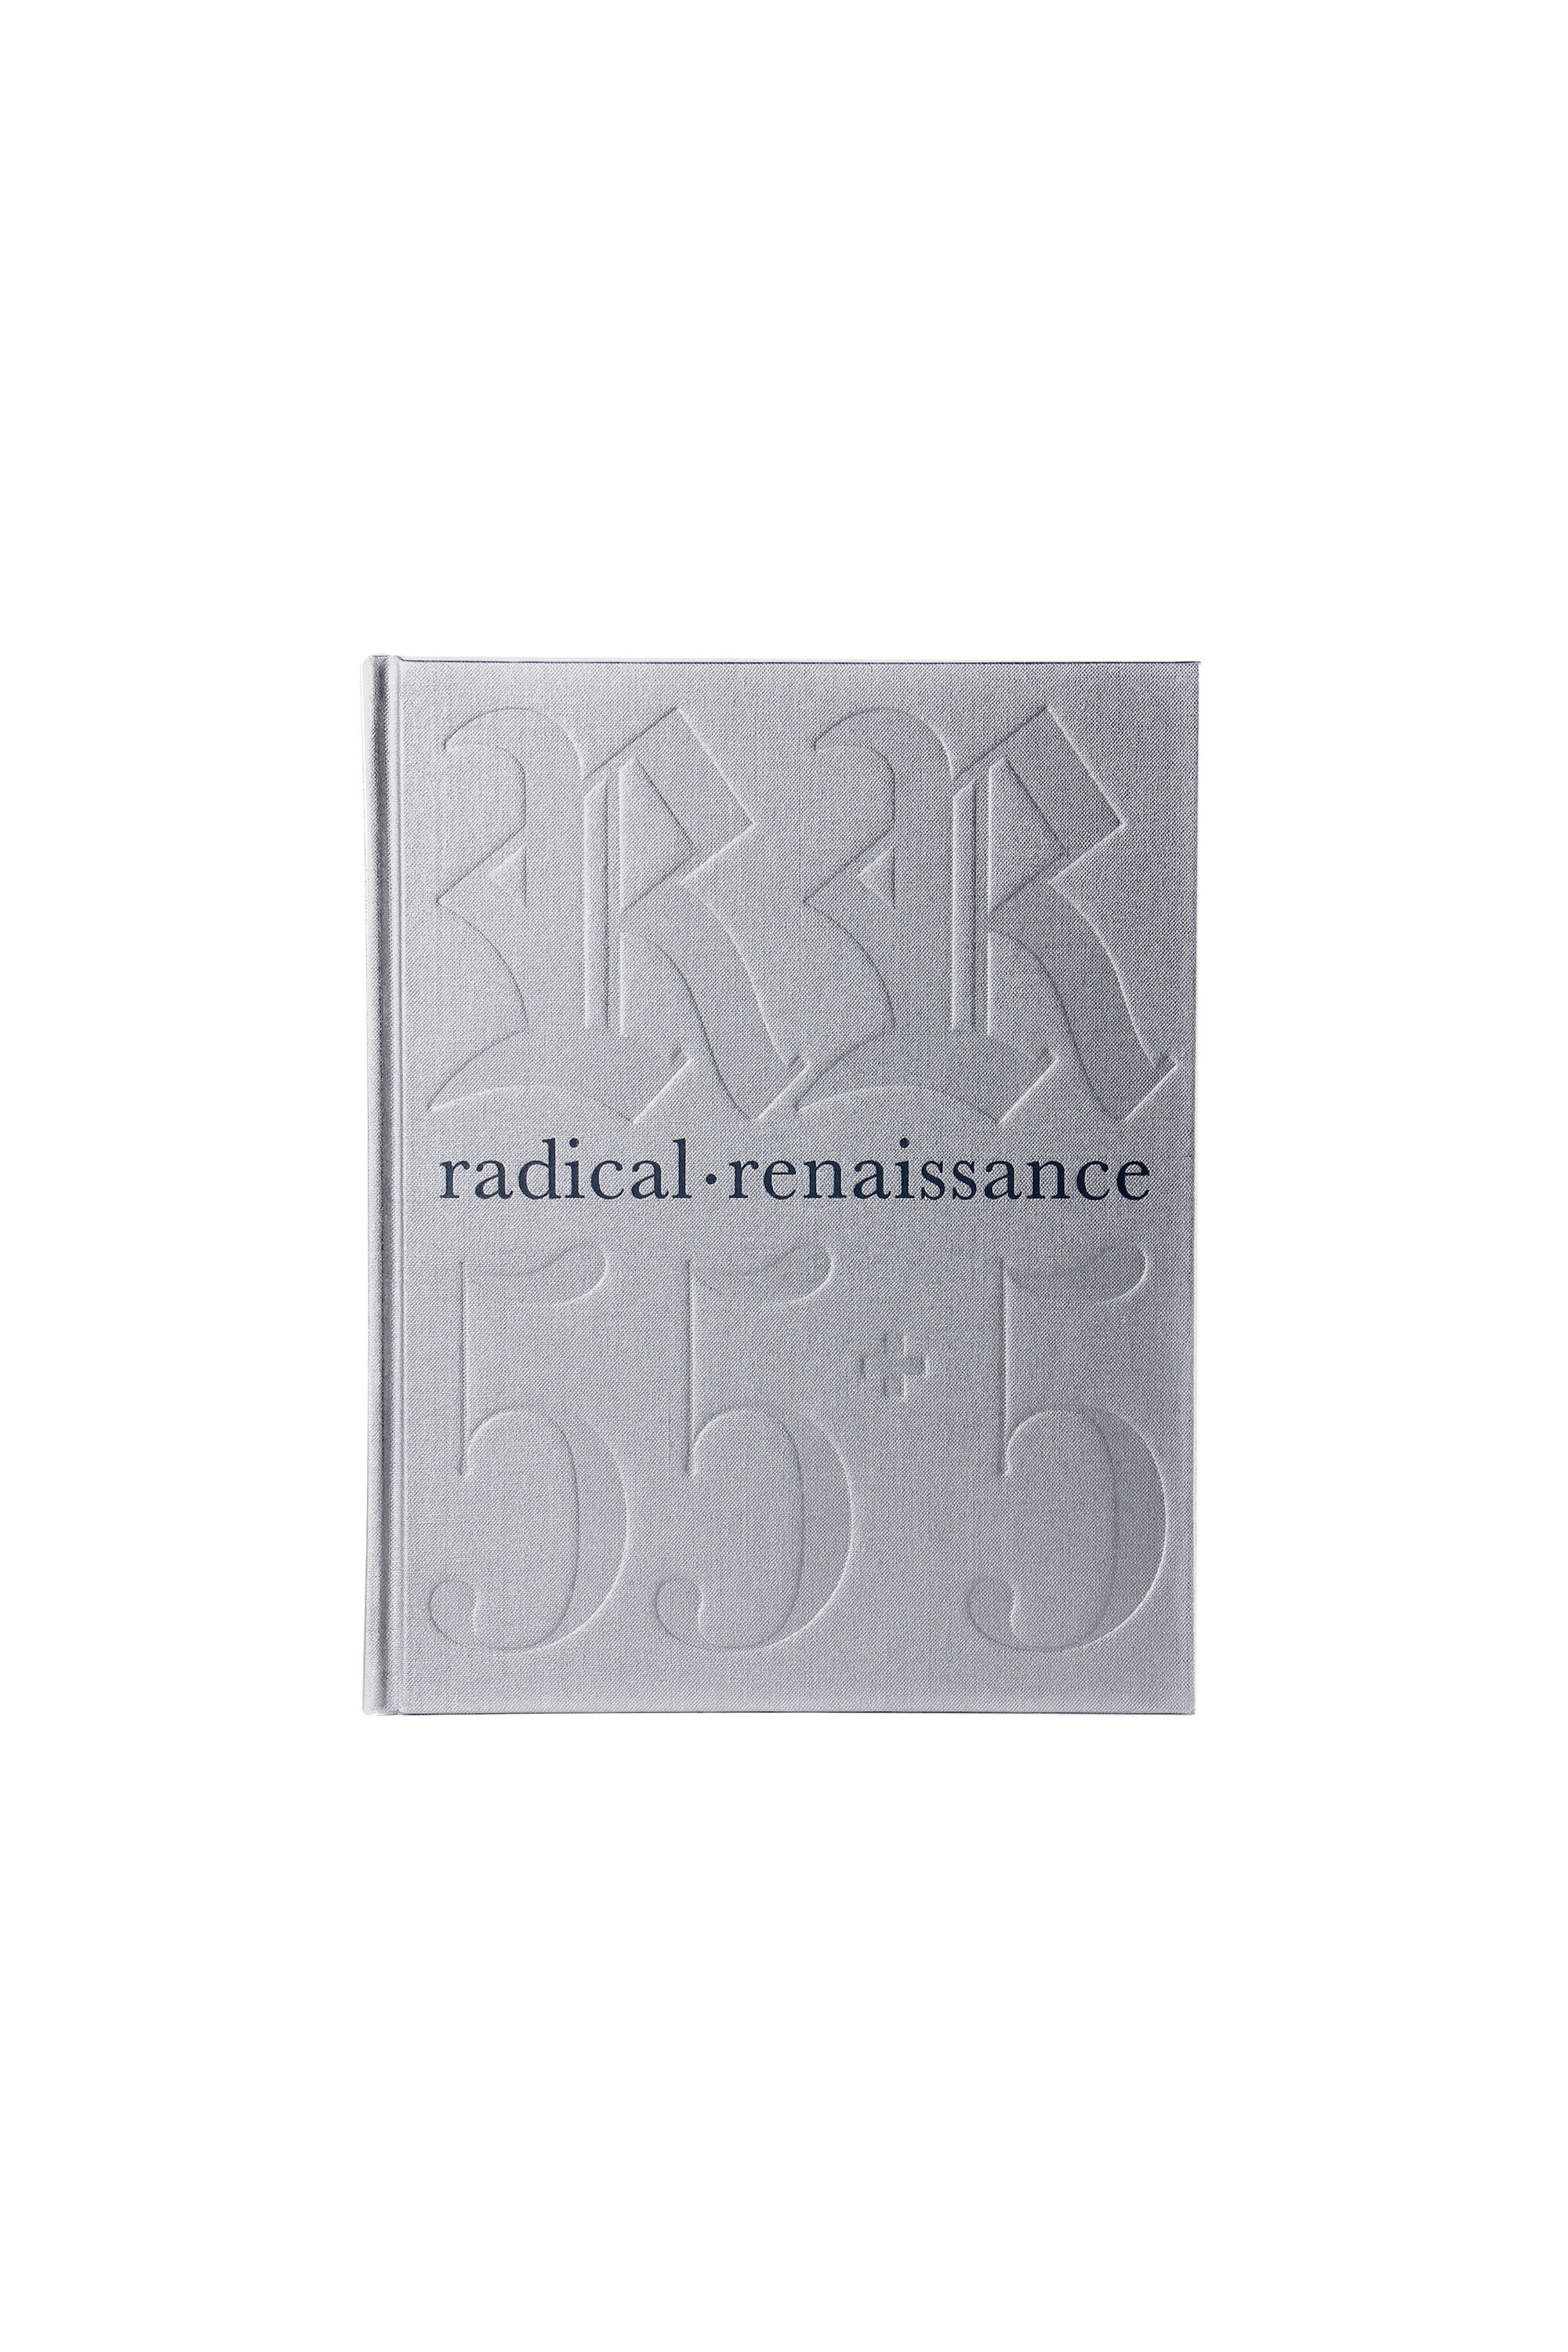 Diesel - Radical Renaissance 55+5 (signed by RR),  - Image 1